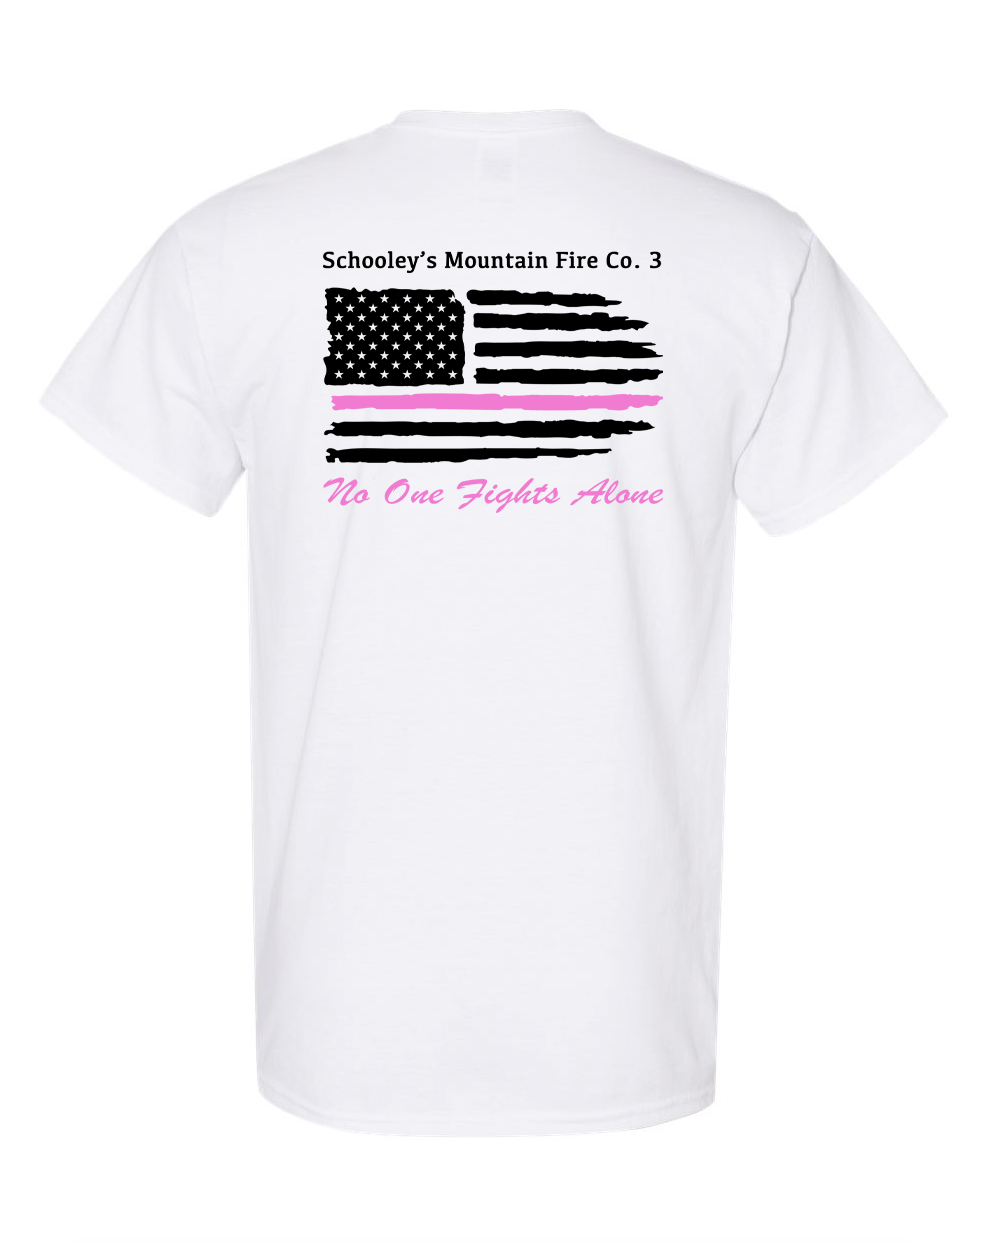 SMFC Breast Cancer Awareness T-Shirt